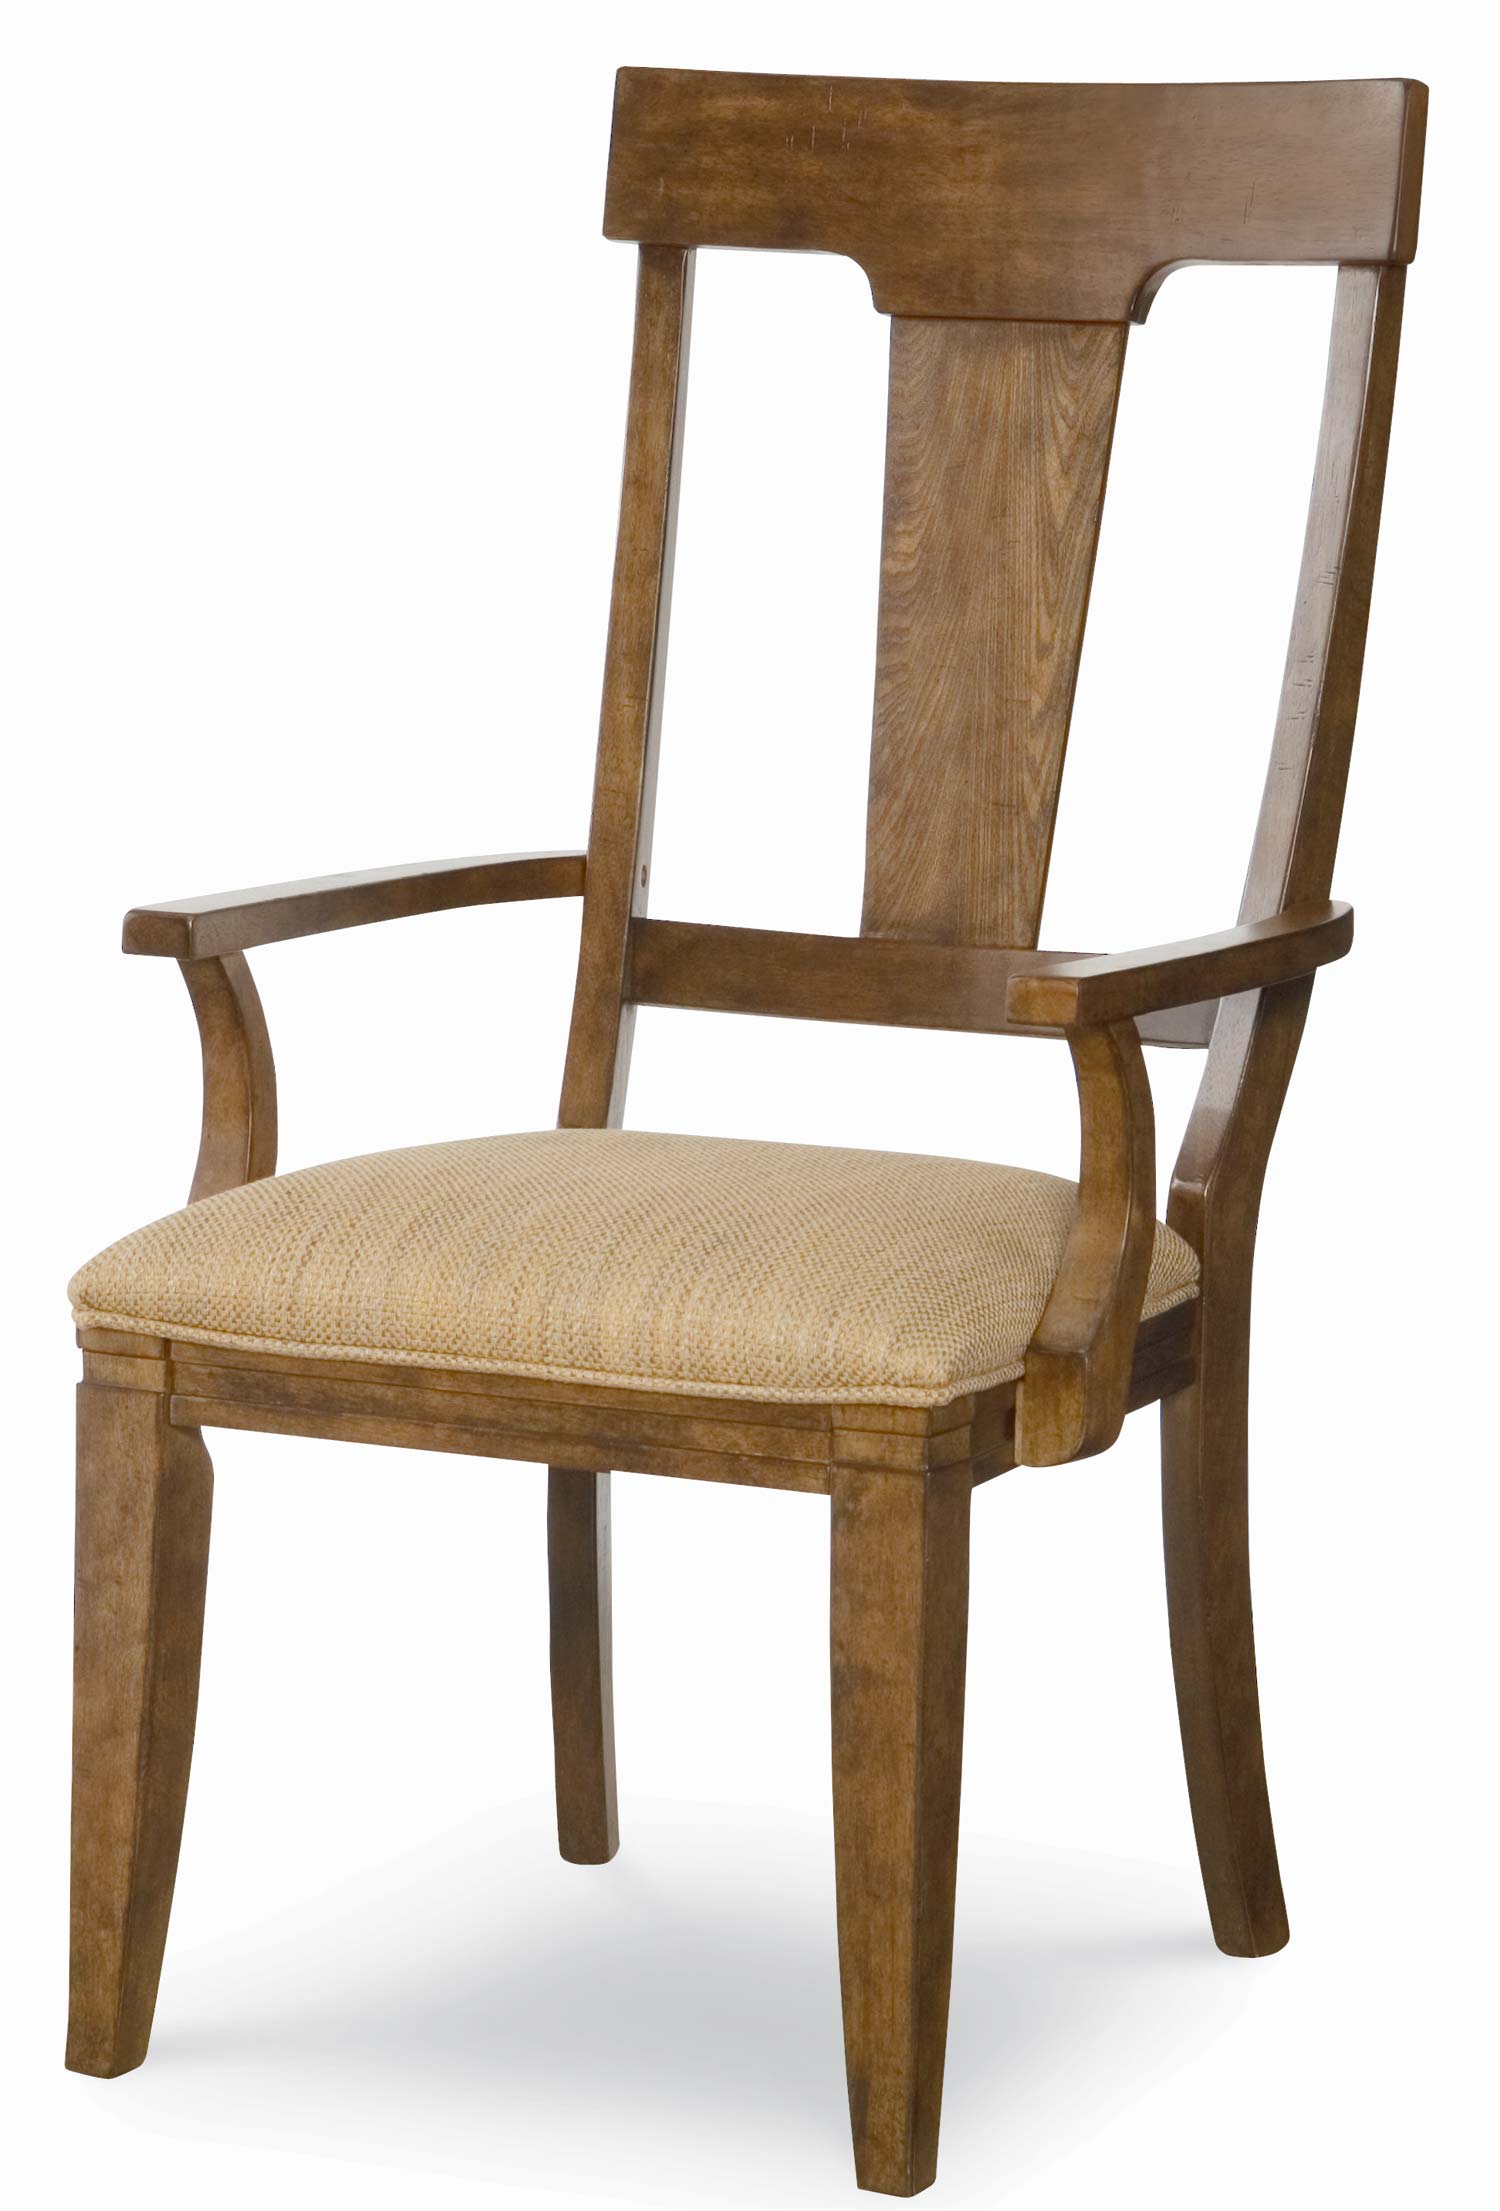 Legacy Classic River Run Splat Back Arm Chair - Bourbon